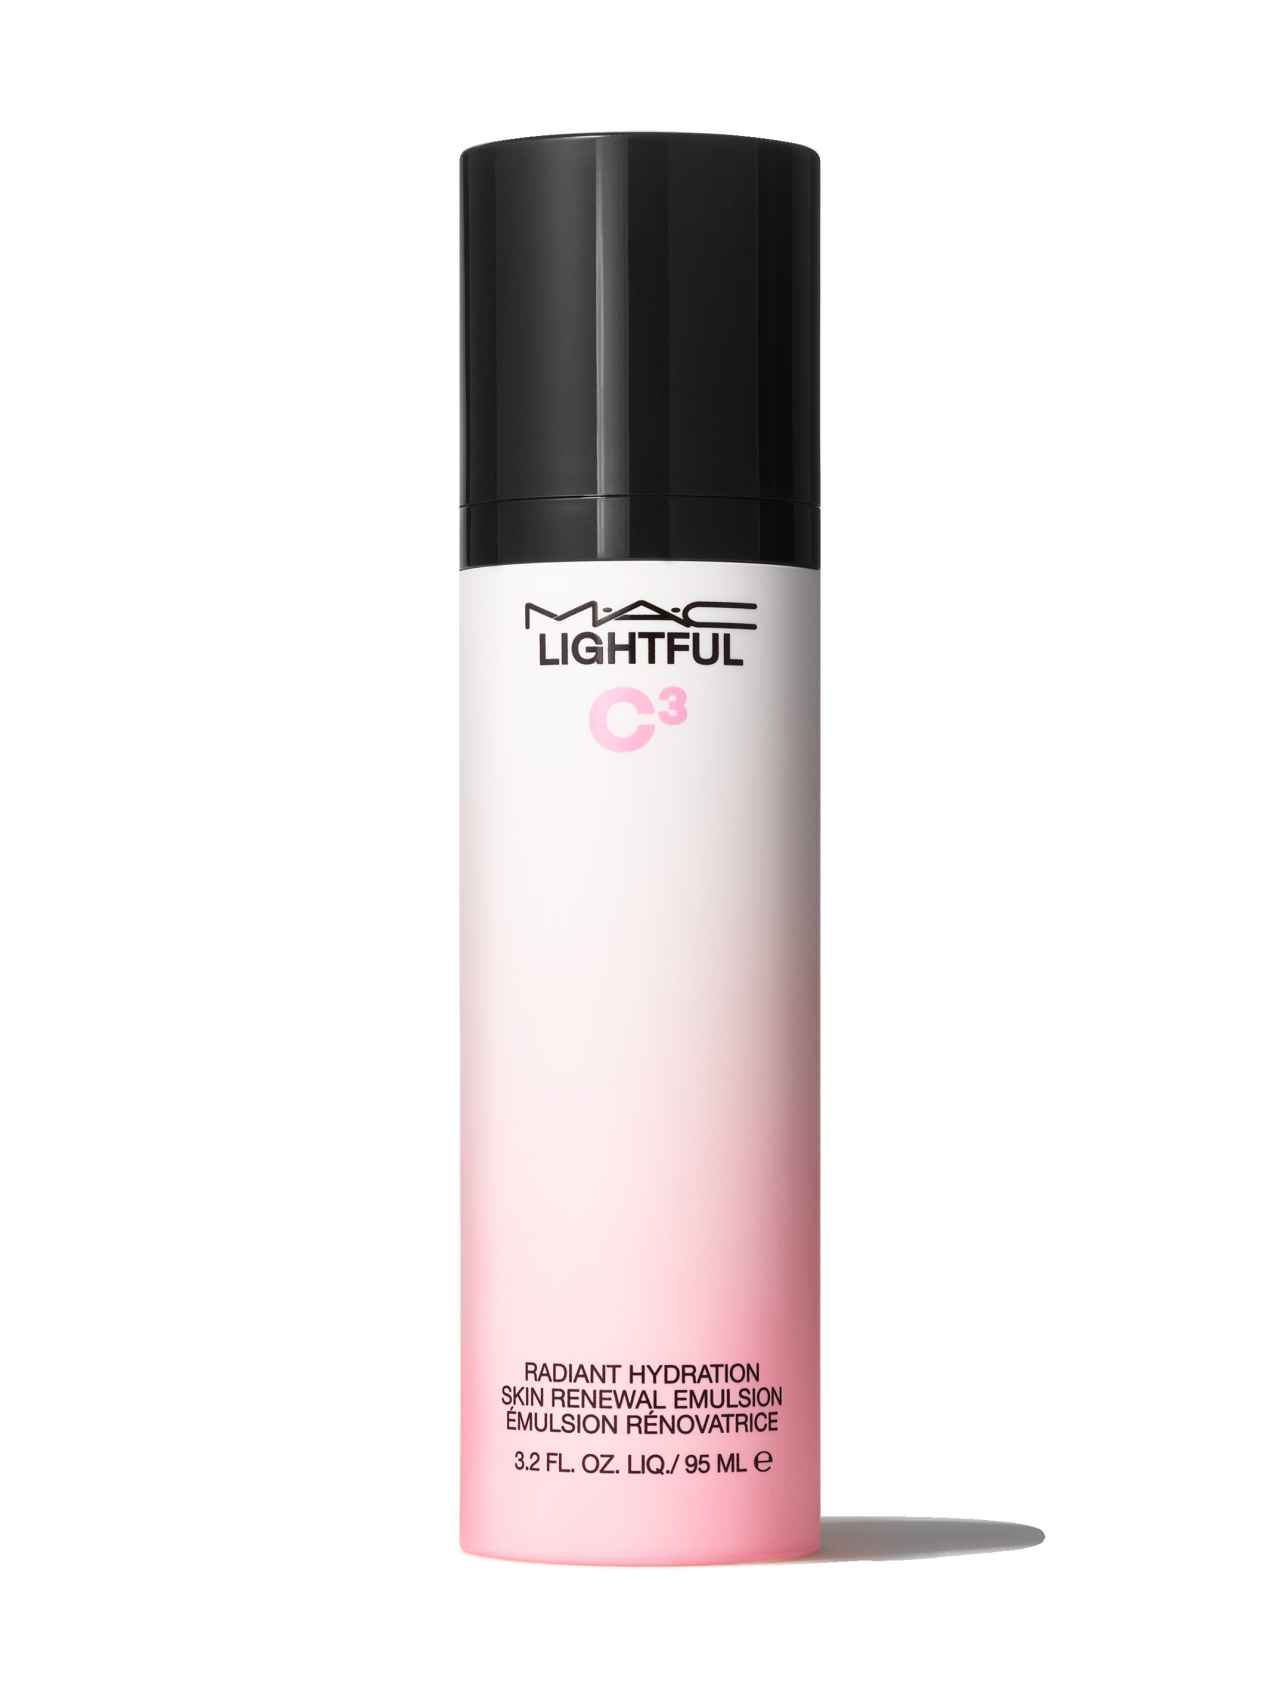 Lightful C³ Radiant Hydration Skin Renewal Emulsion de MAC.